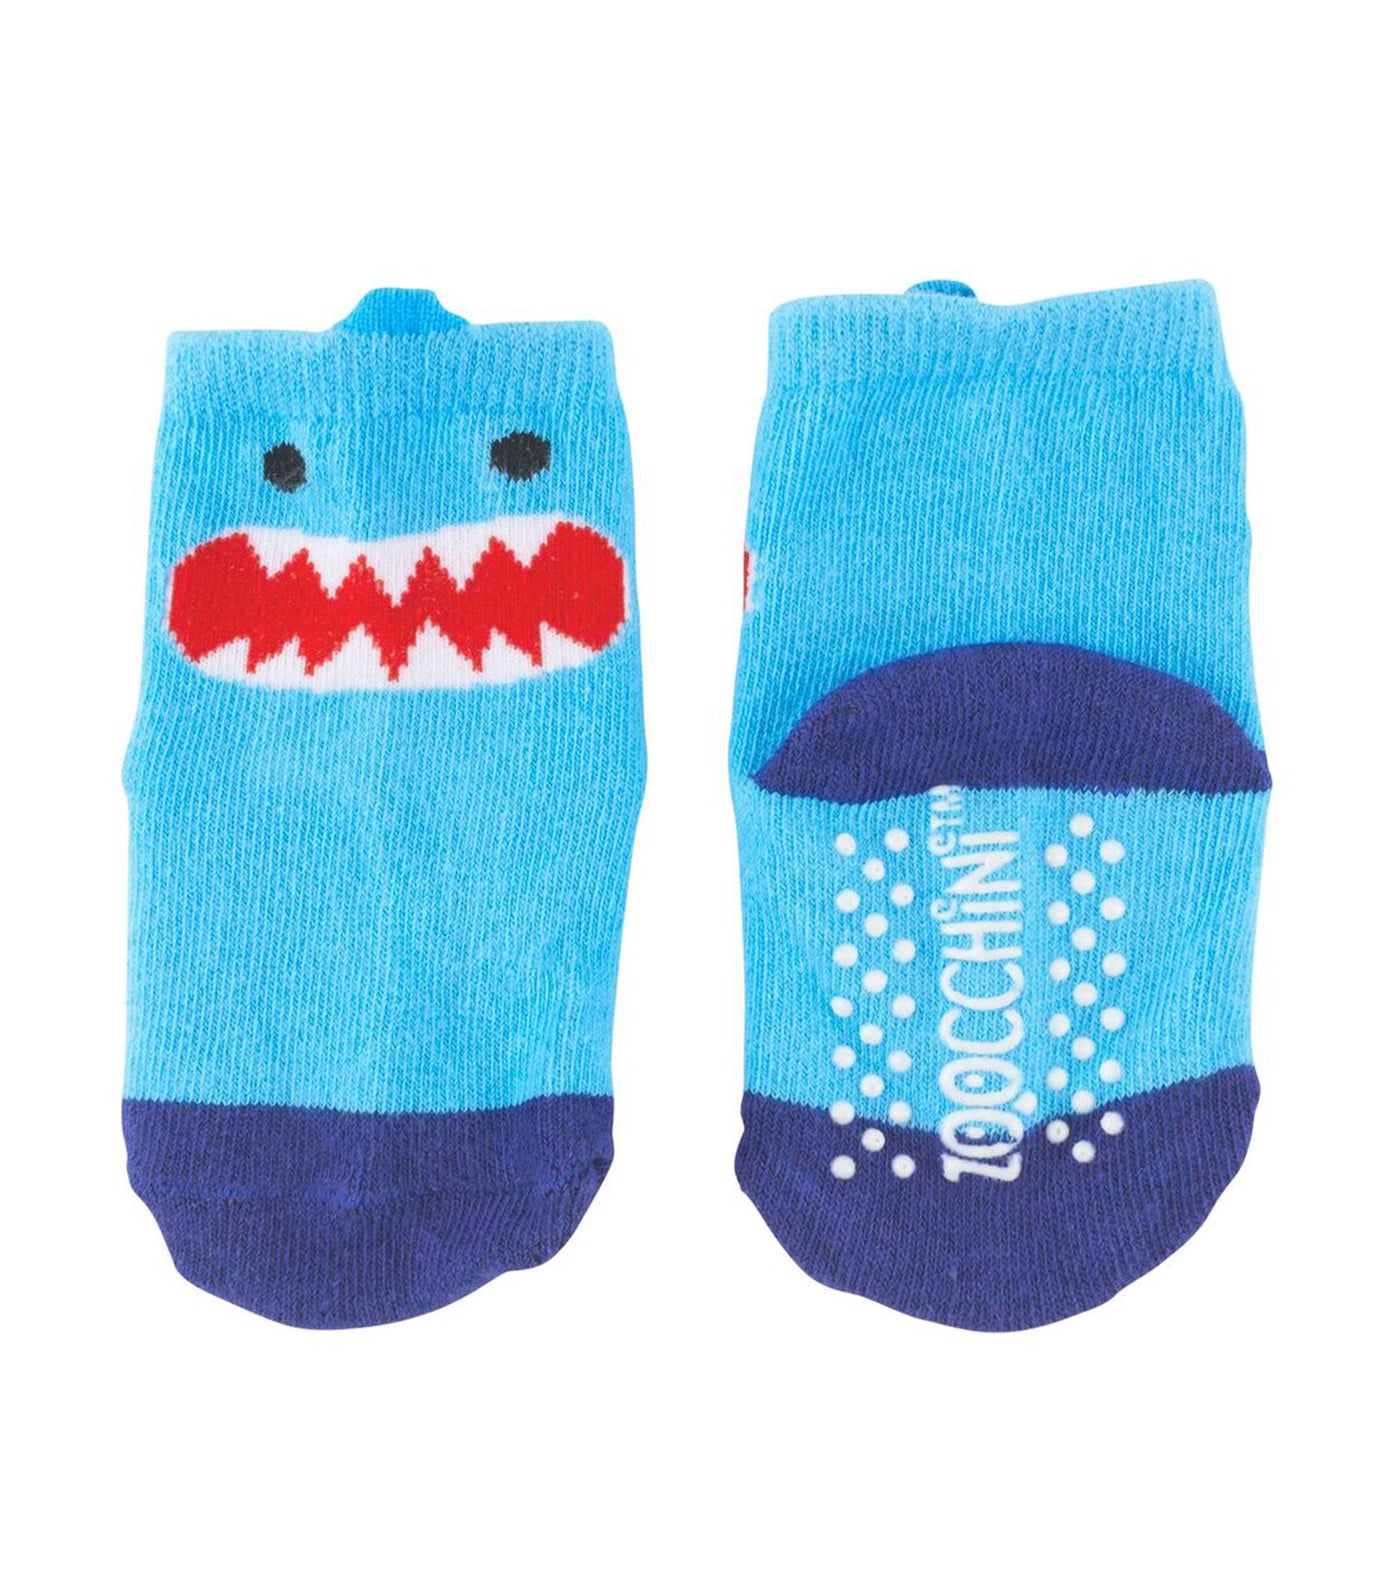 zoocchini grip+easy comfort crawler leggings and socks set - sherman the shark